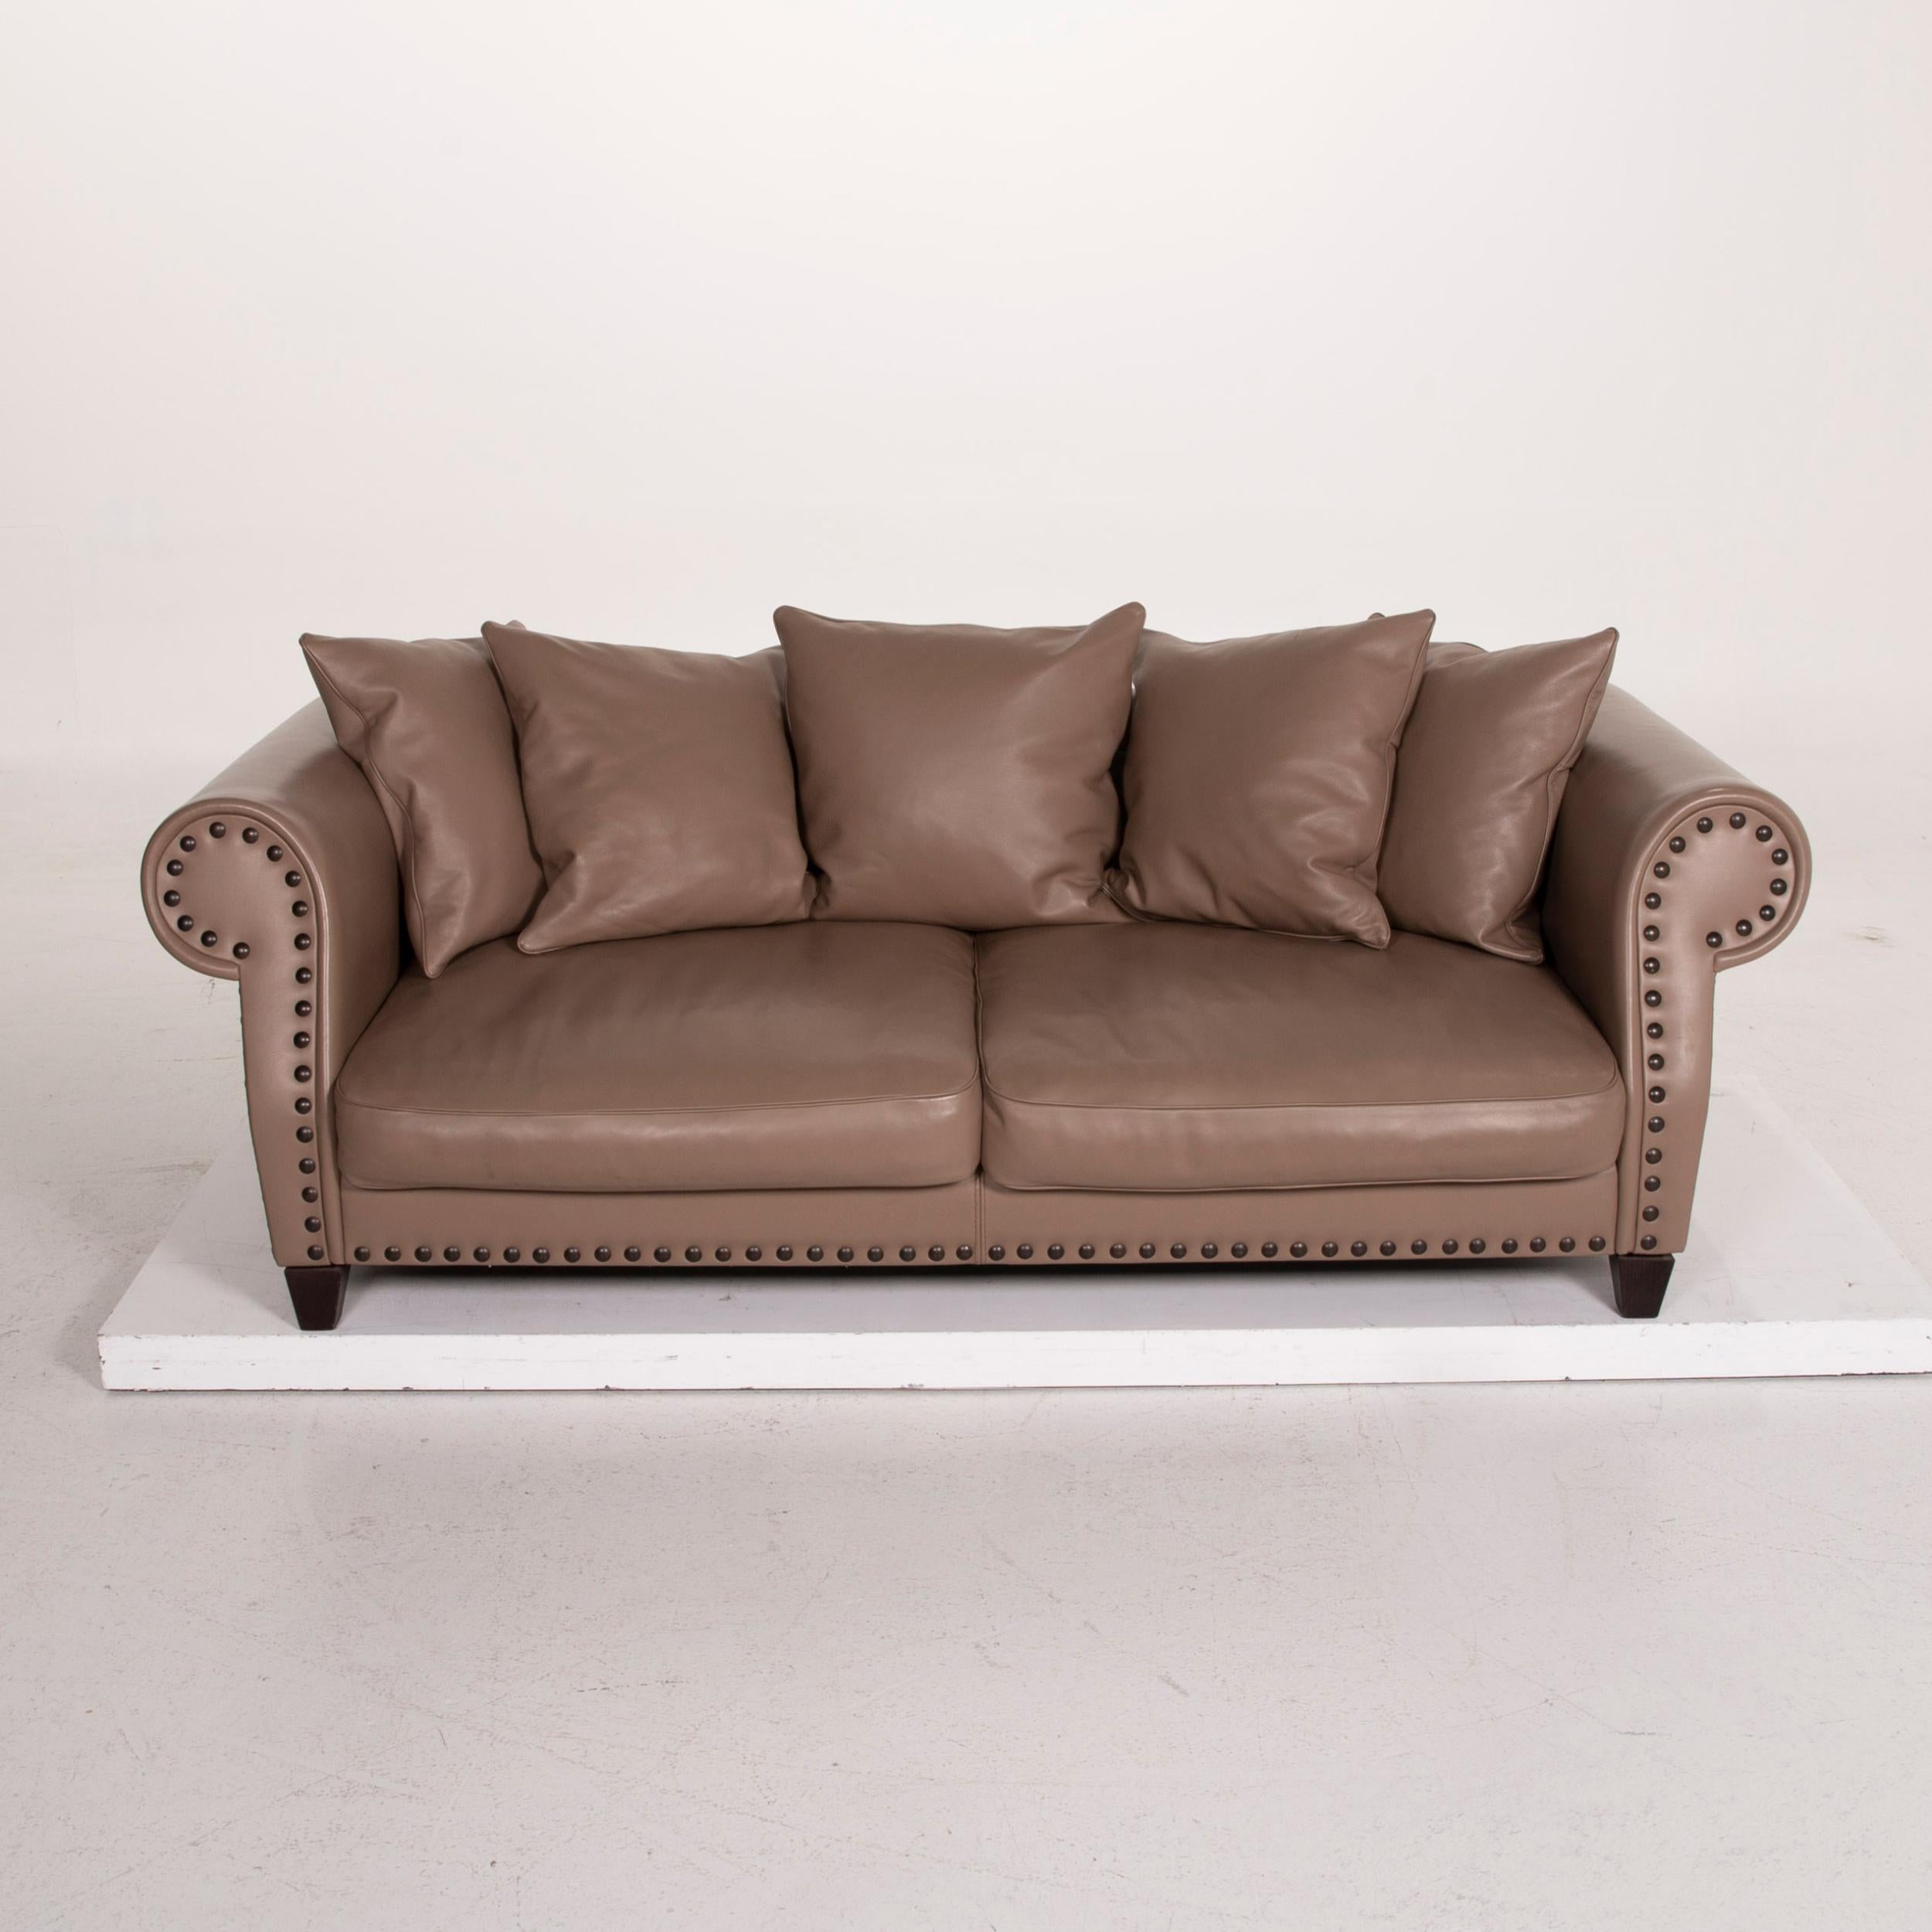 Contemporary Roche Bobois Chester Chic Leather Sofa Brown Three-Seat For Sale